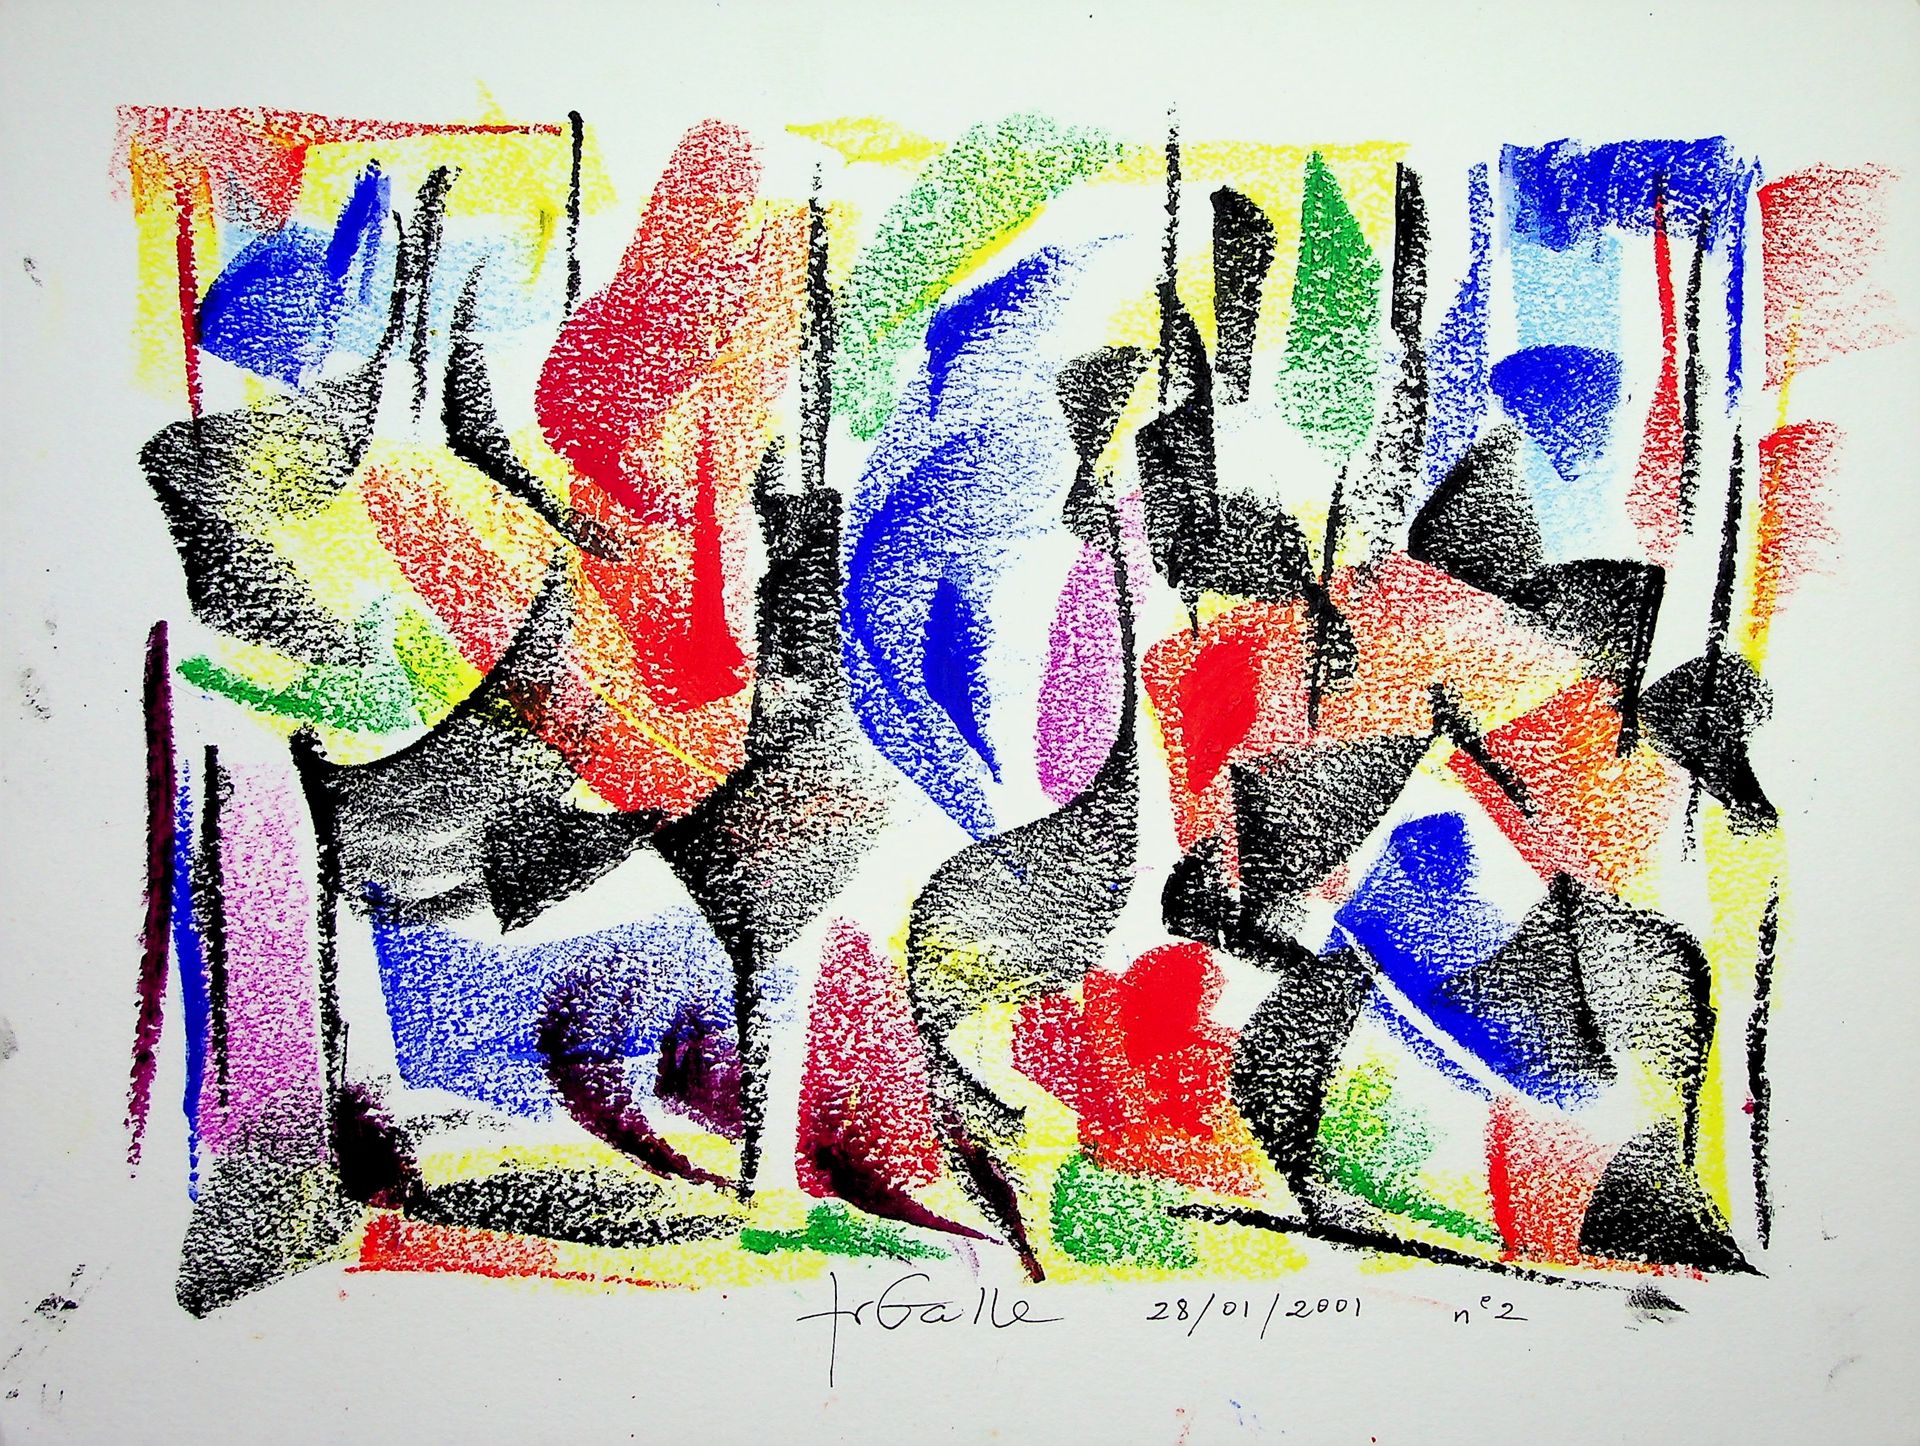 Françoise Galle 弗朗索瓦丝-加勒 (1940)

抽象, 2001

油粉画

右下方有艺术家的签名和日期

牛皮纸上 24 x 32 cm

&hellip;